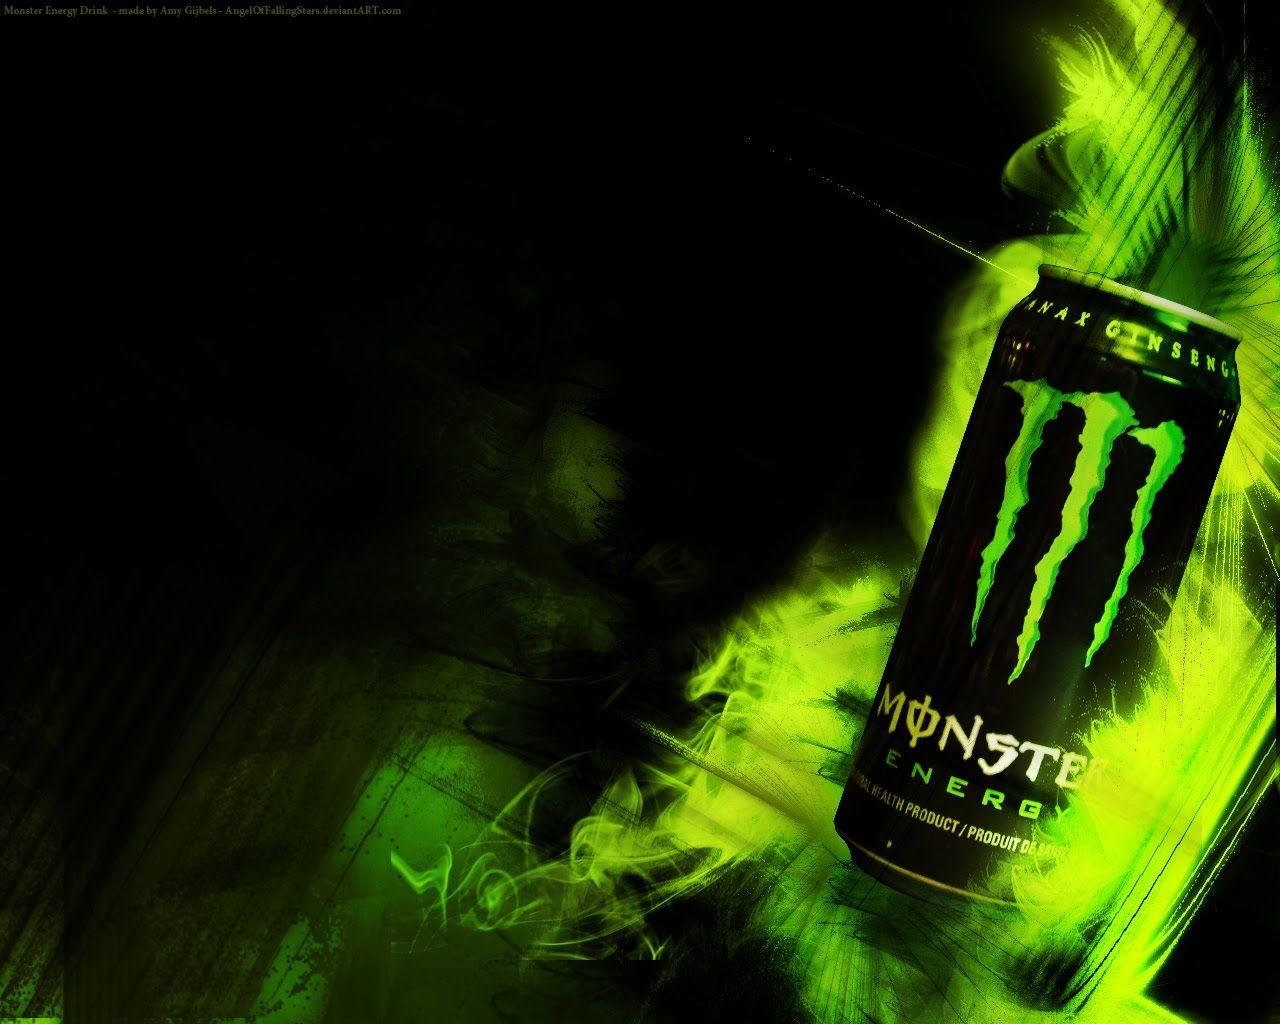 Monster energy wallpaper free download